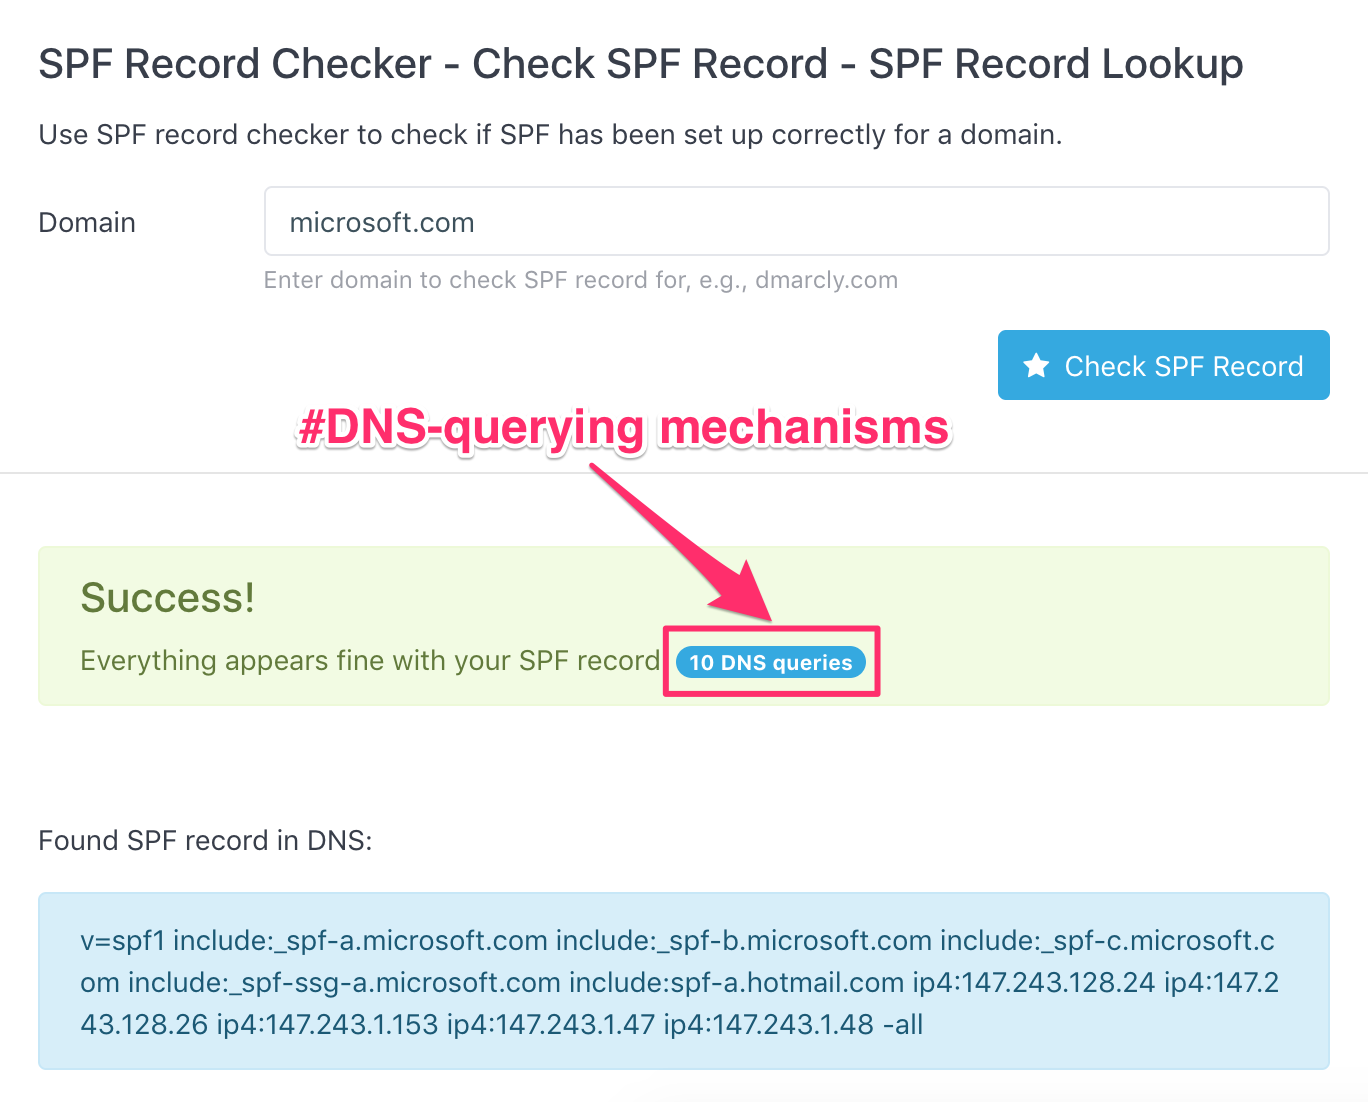 DMARCLY SPF record DNS queries